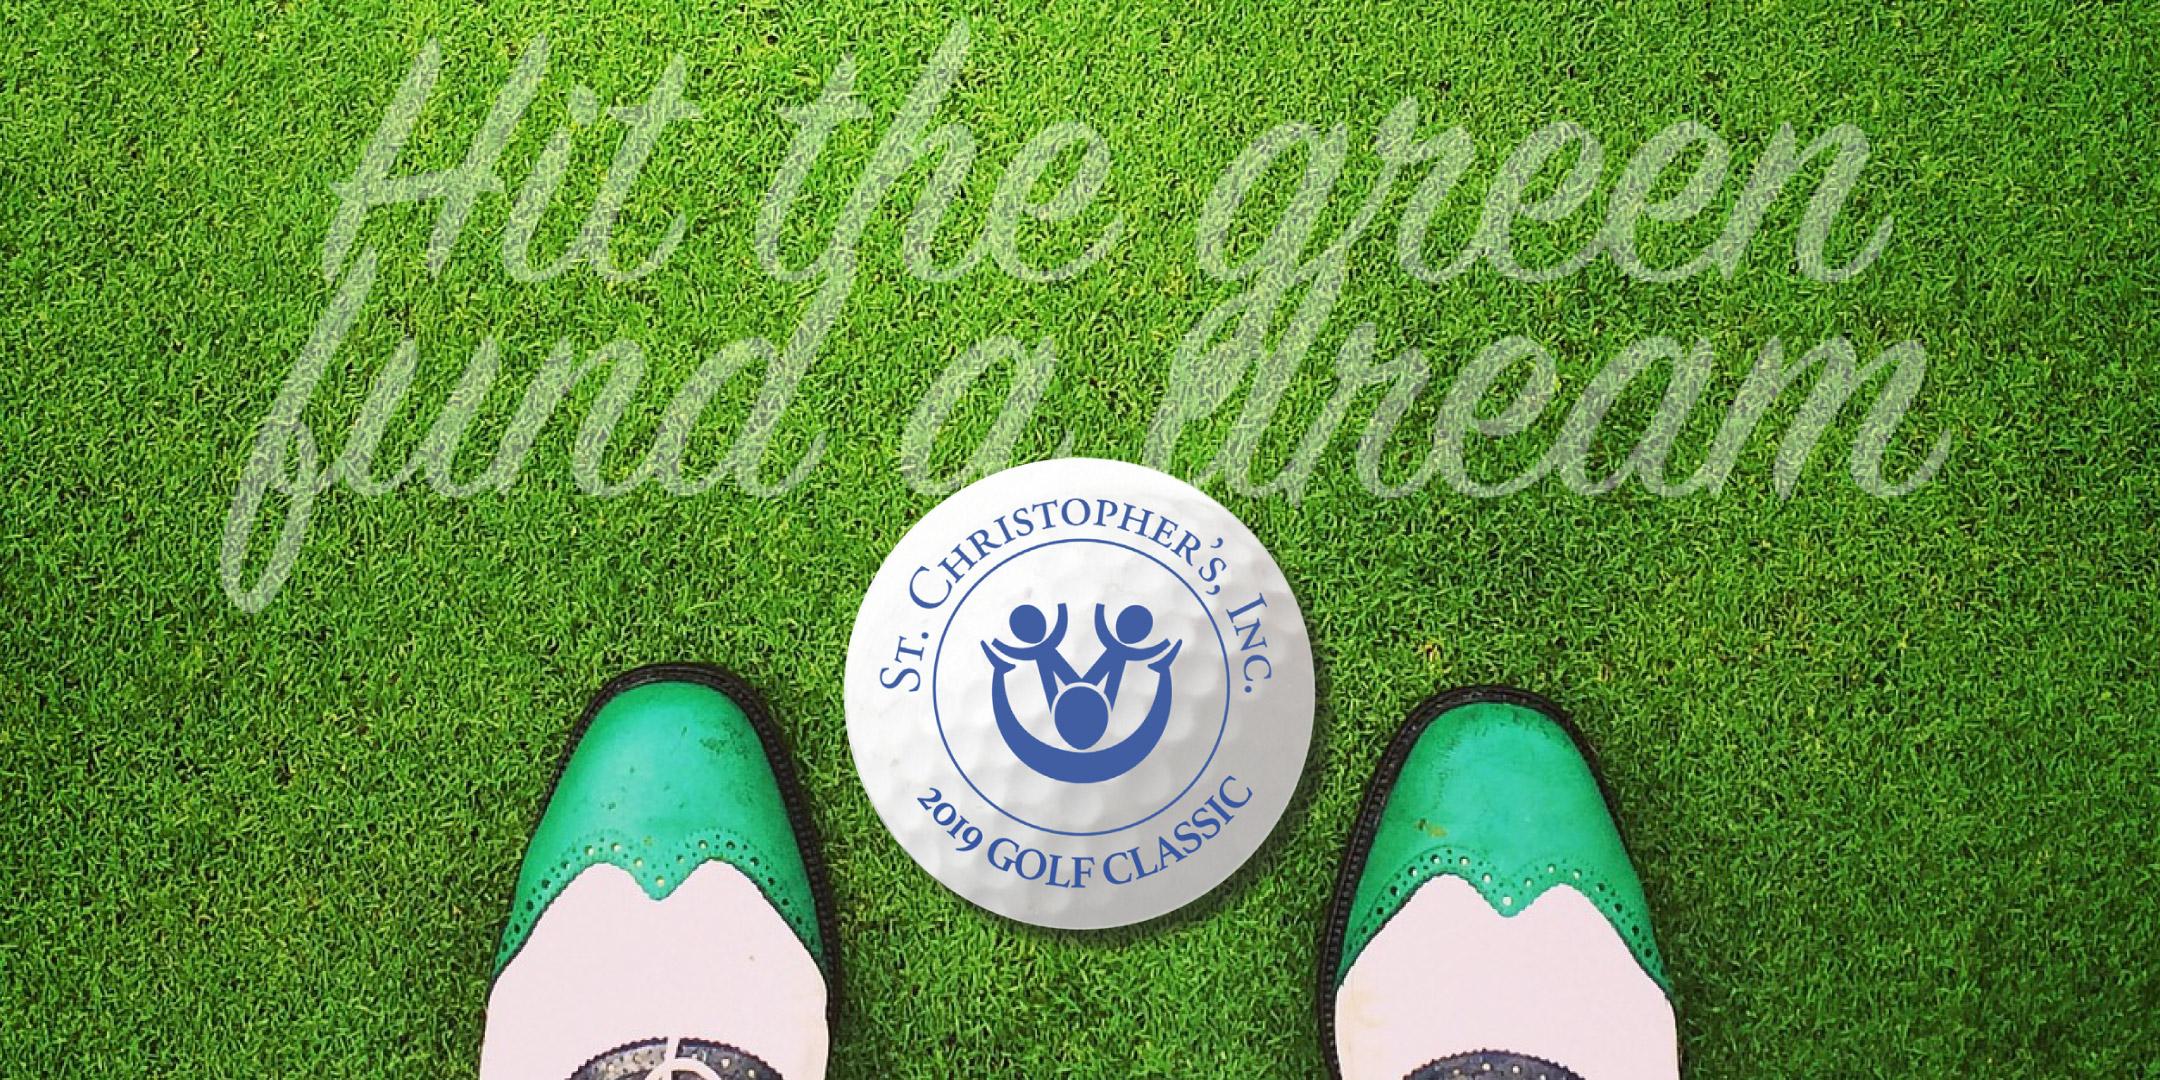 St. Christopher's, Inc. 2019 Golf Classic